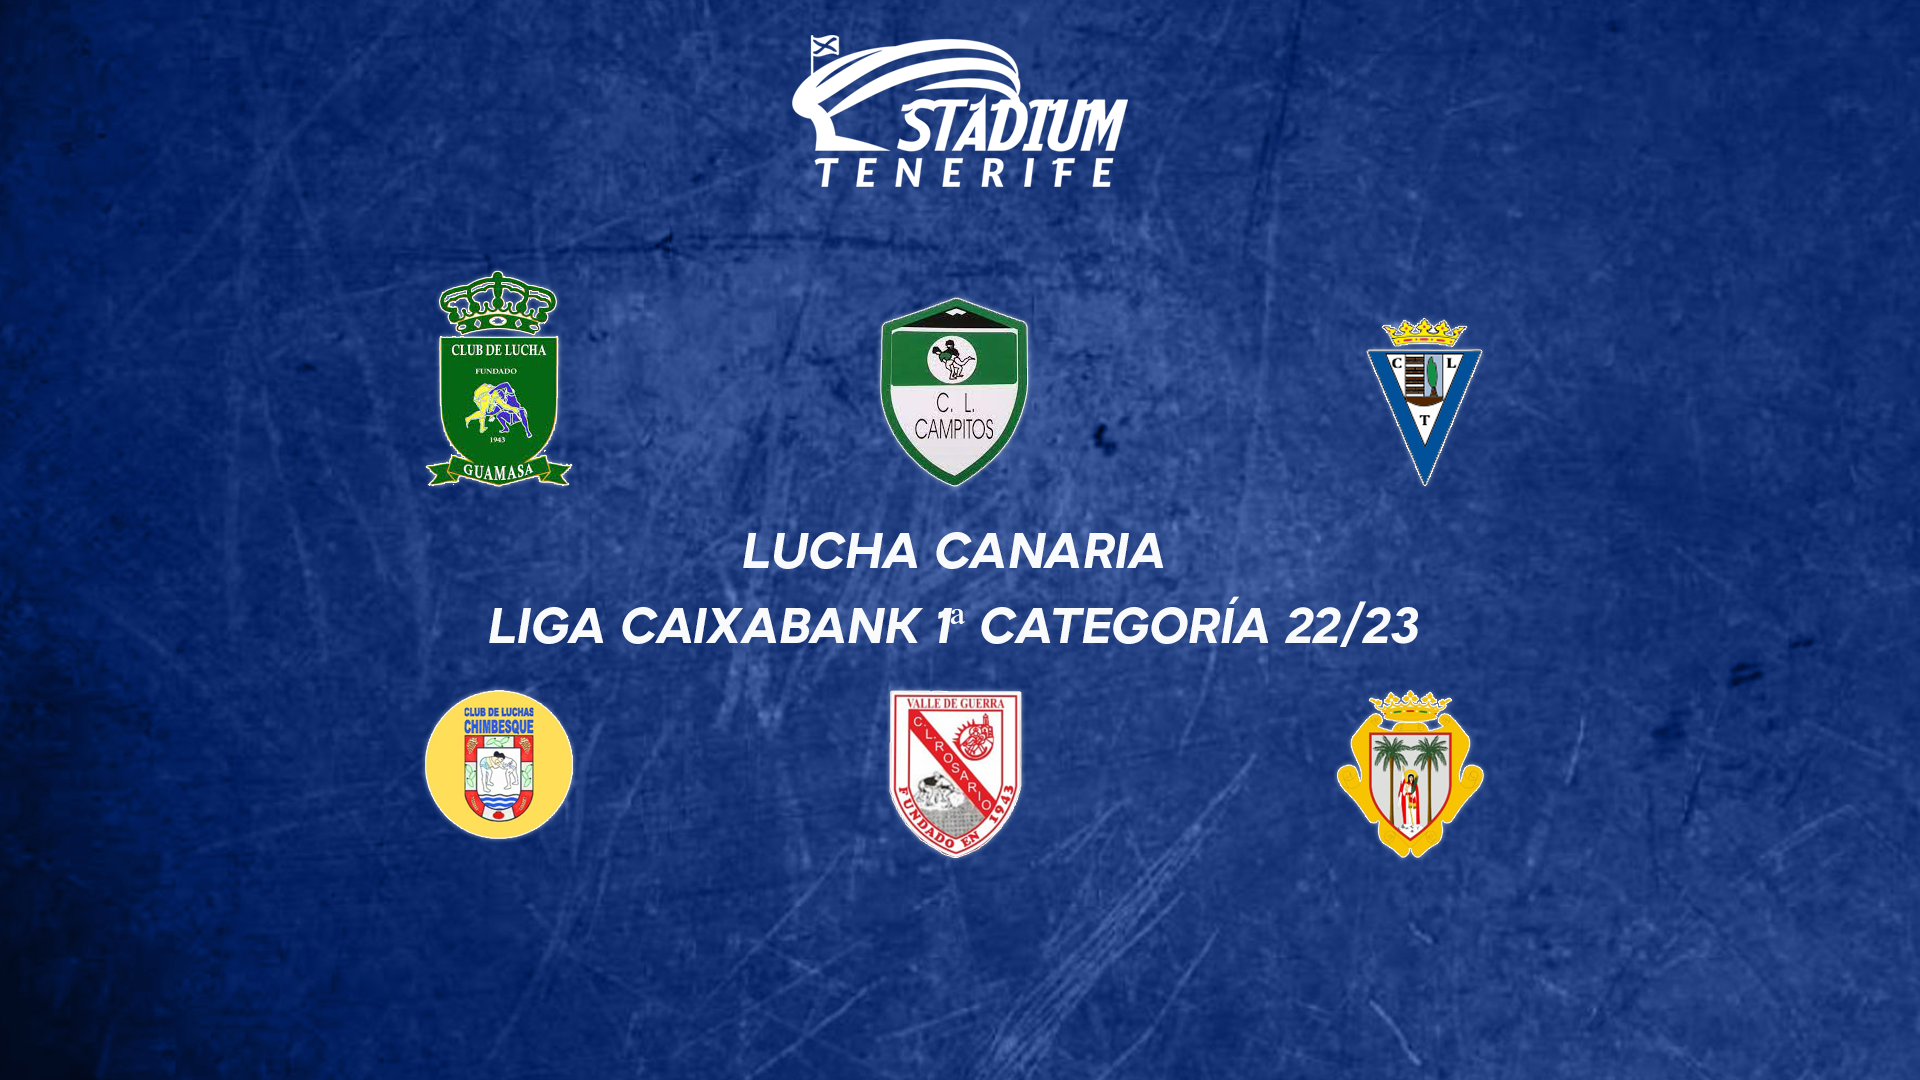 PREVIA | 5ª Jornada de la Liga CaixaBank de Lucha Canaria (25-26 de noviembre)